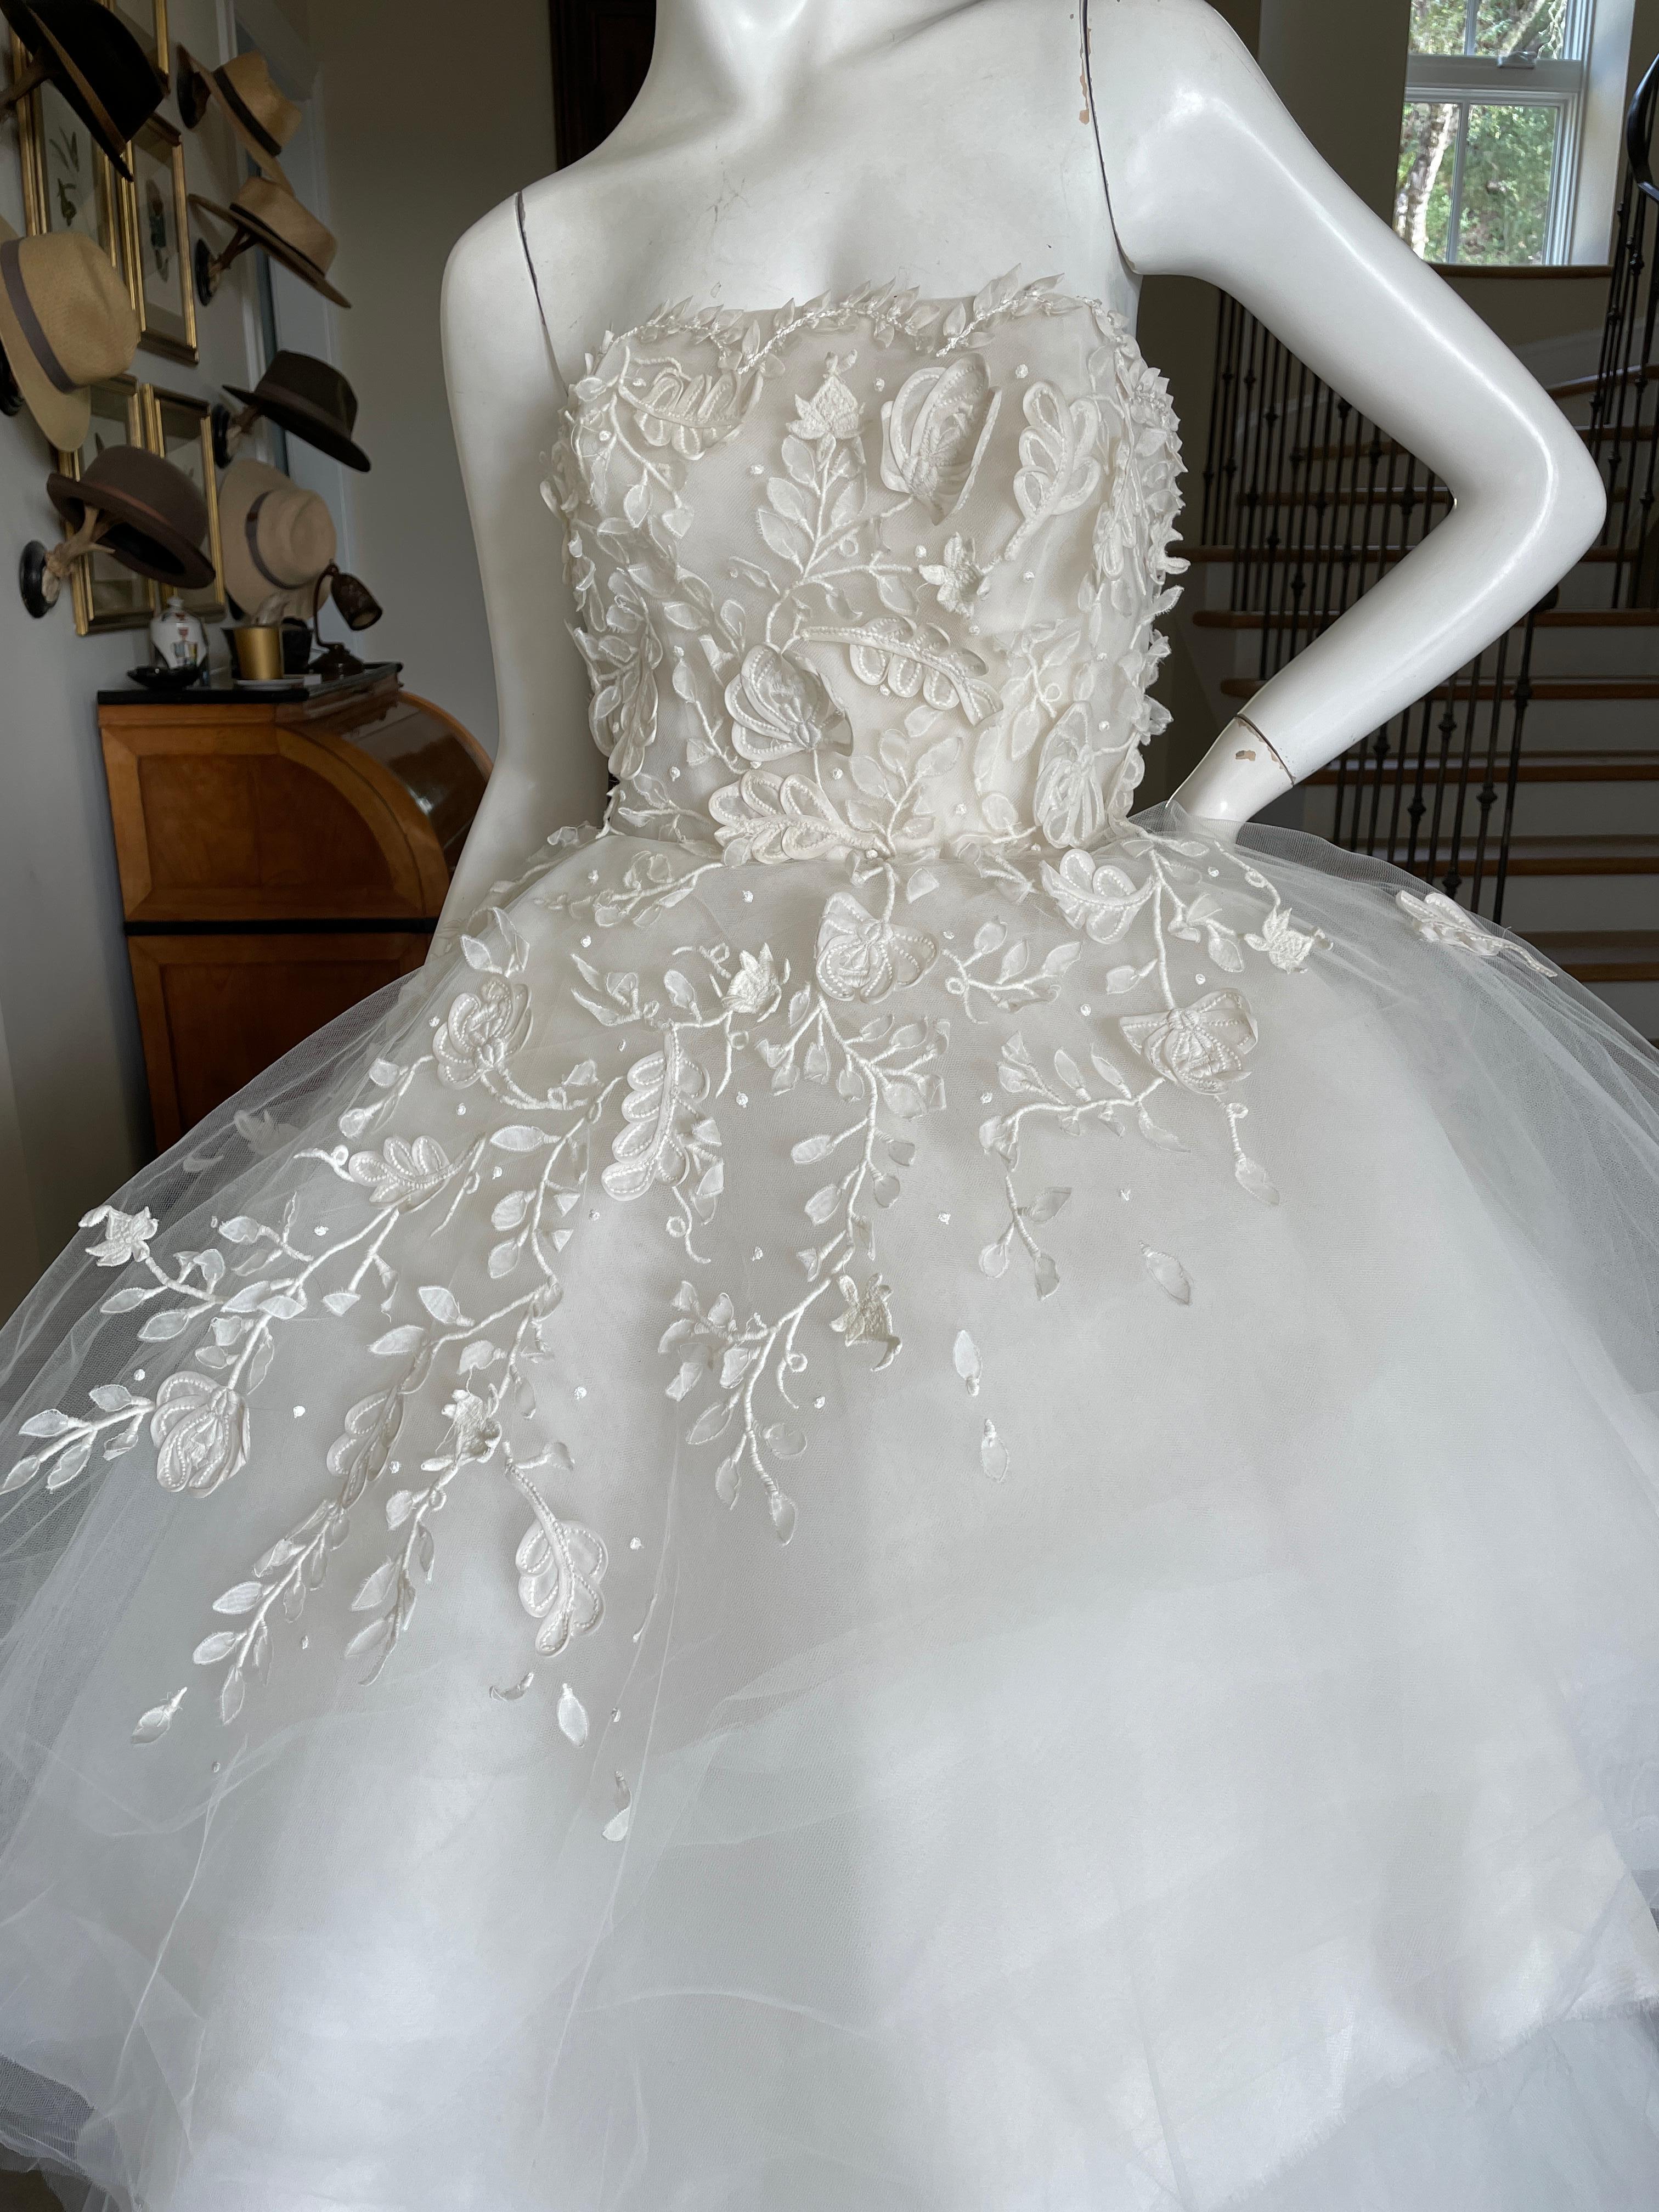 Oscar de la Renta Vintage Wedding Dress with Floral Applique In Excellent Condition For Sale In Cloverdale, CA